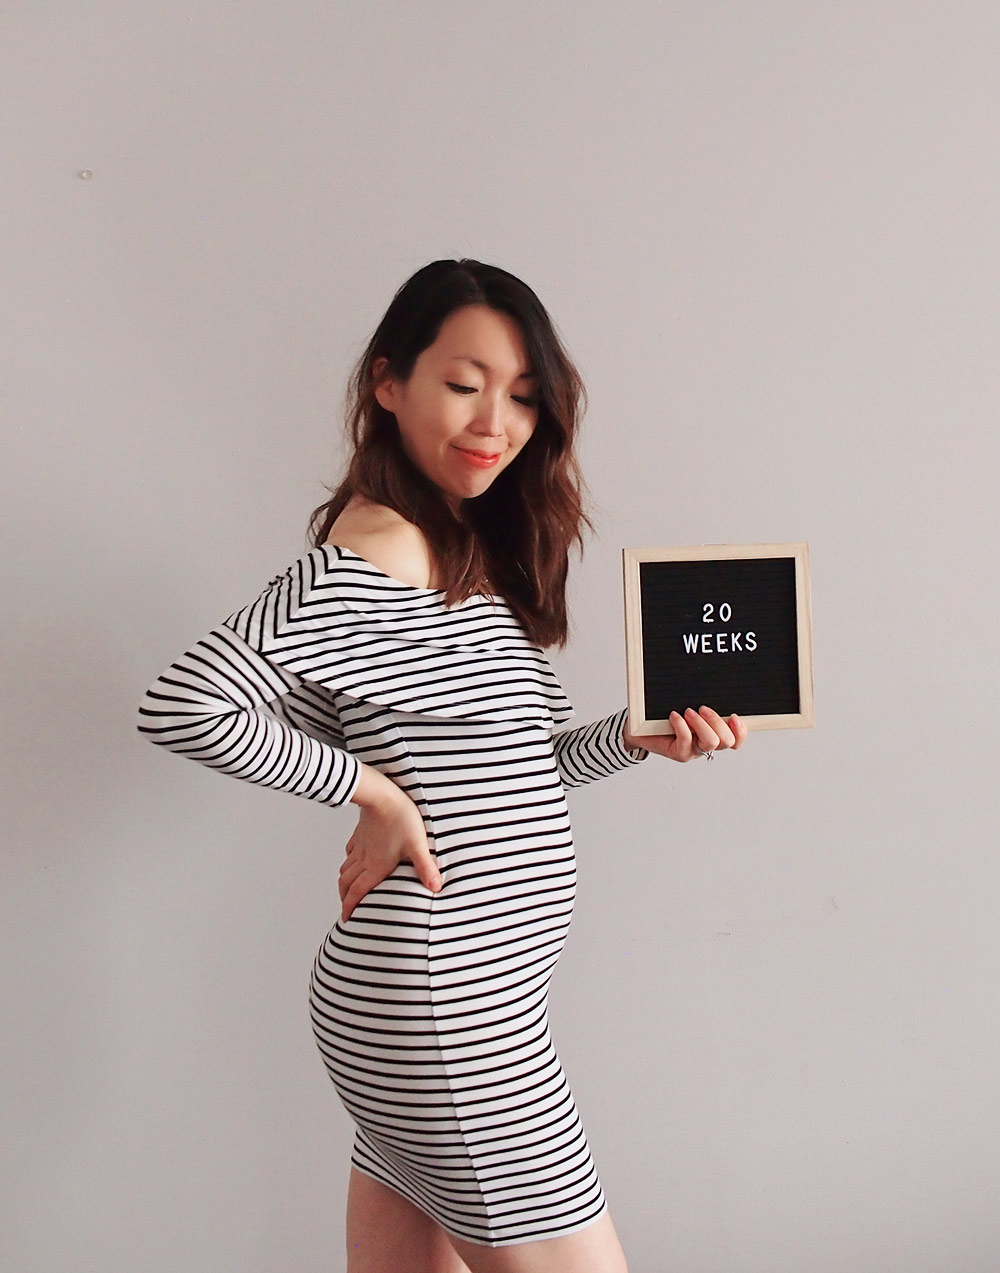 Pregnancy Journal: Second Trimester  - 20 weeks